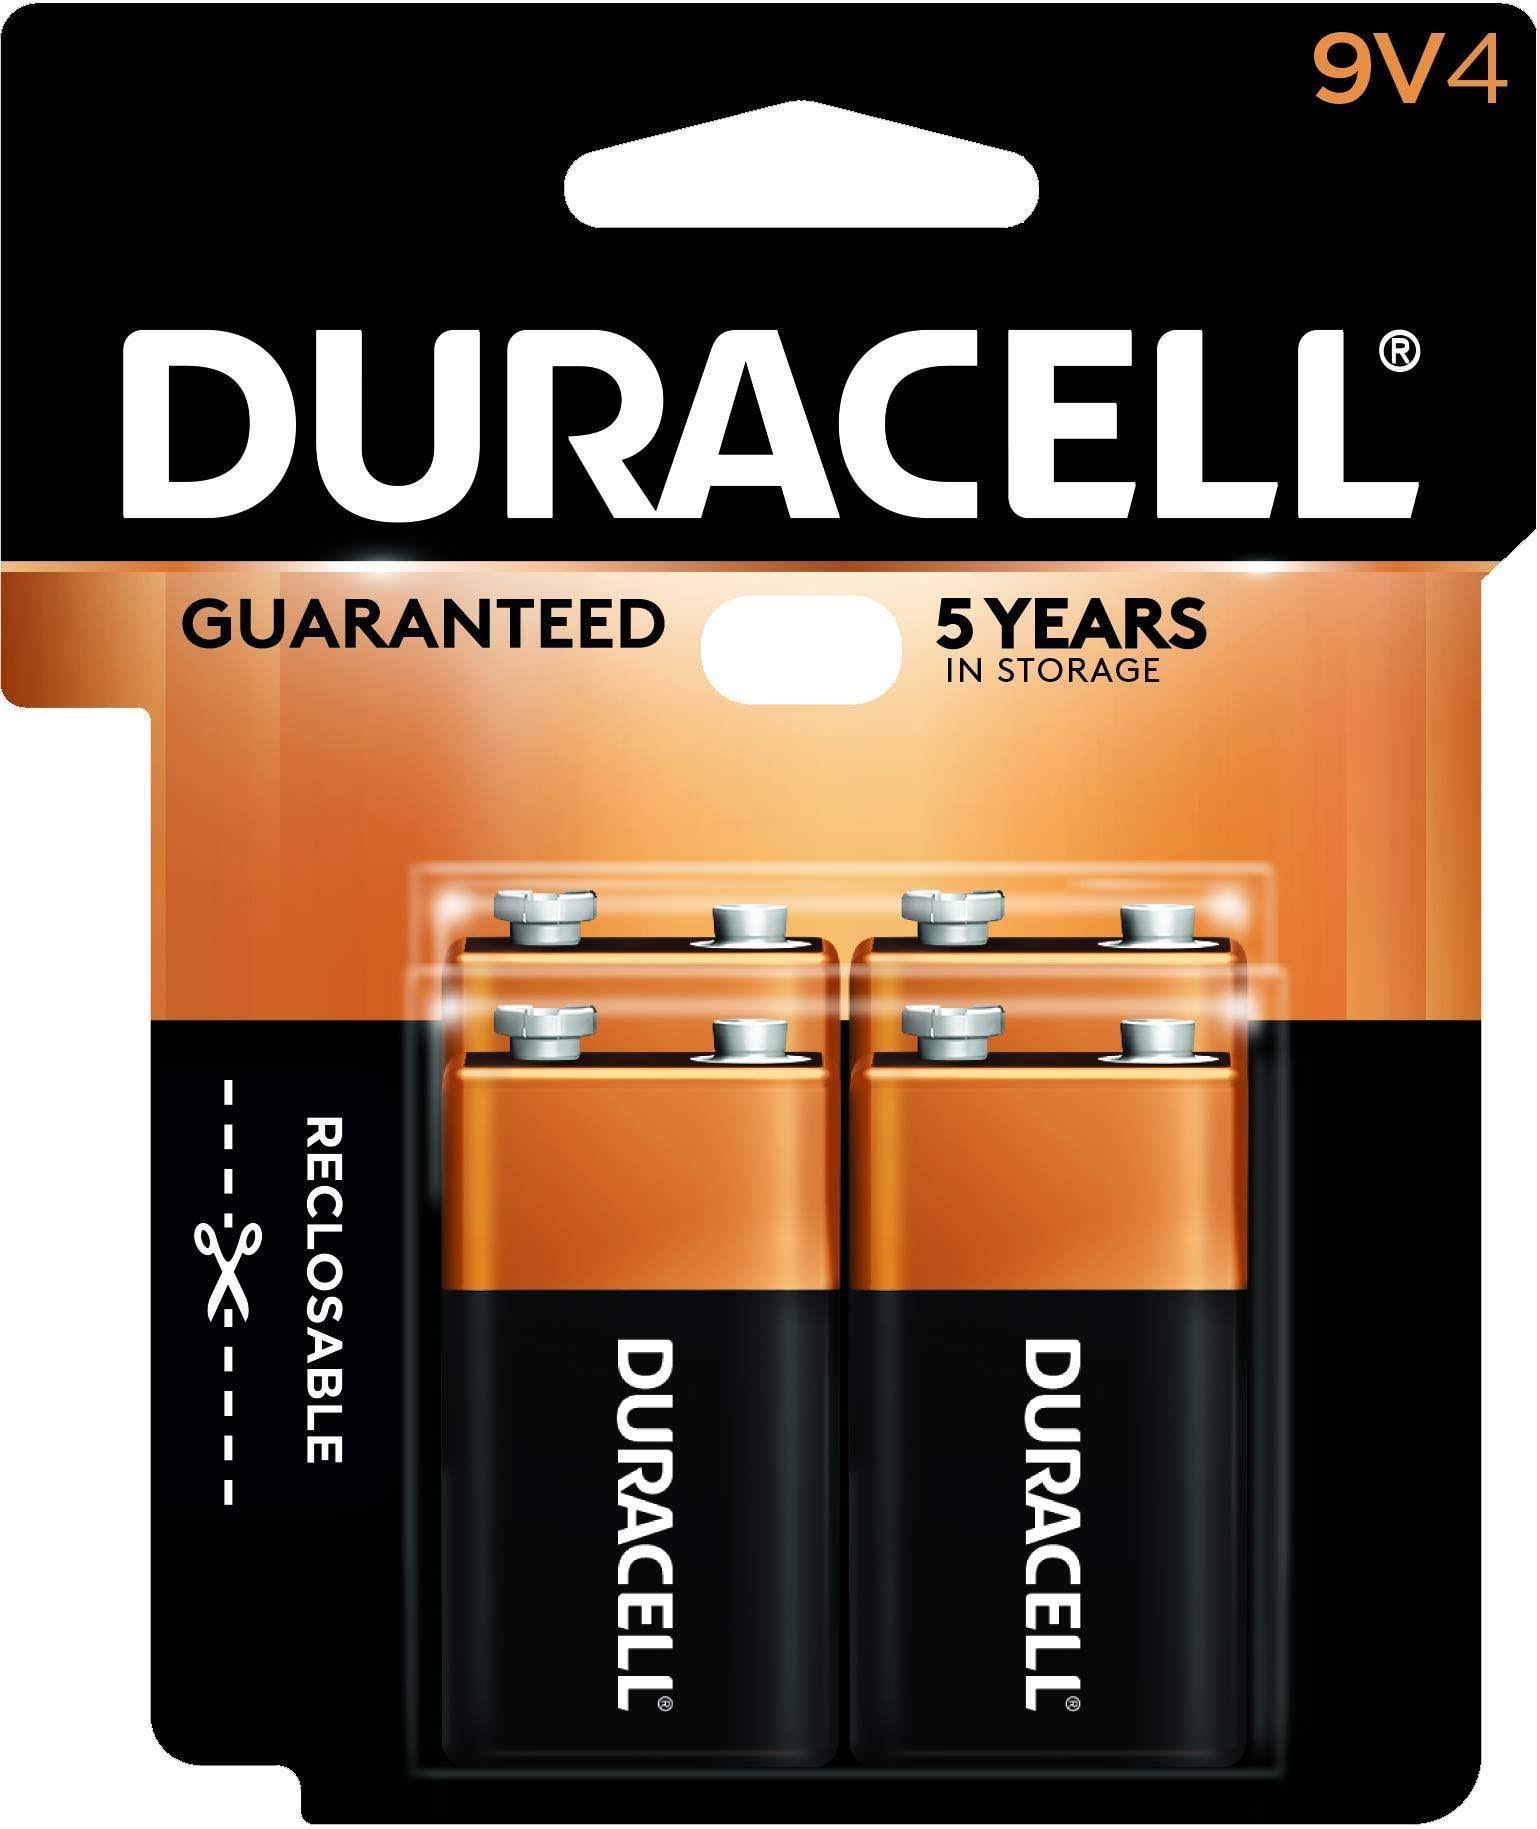 Duracell Coppertop Alkaline Batteries - 9V